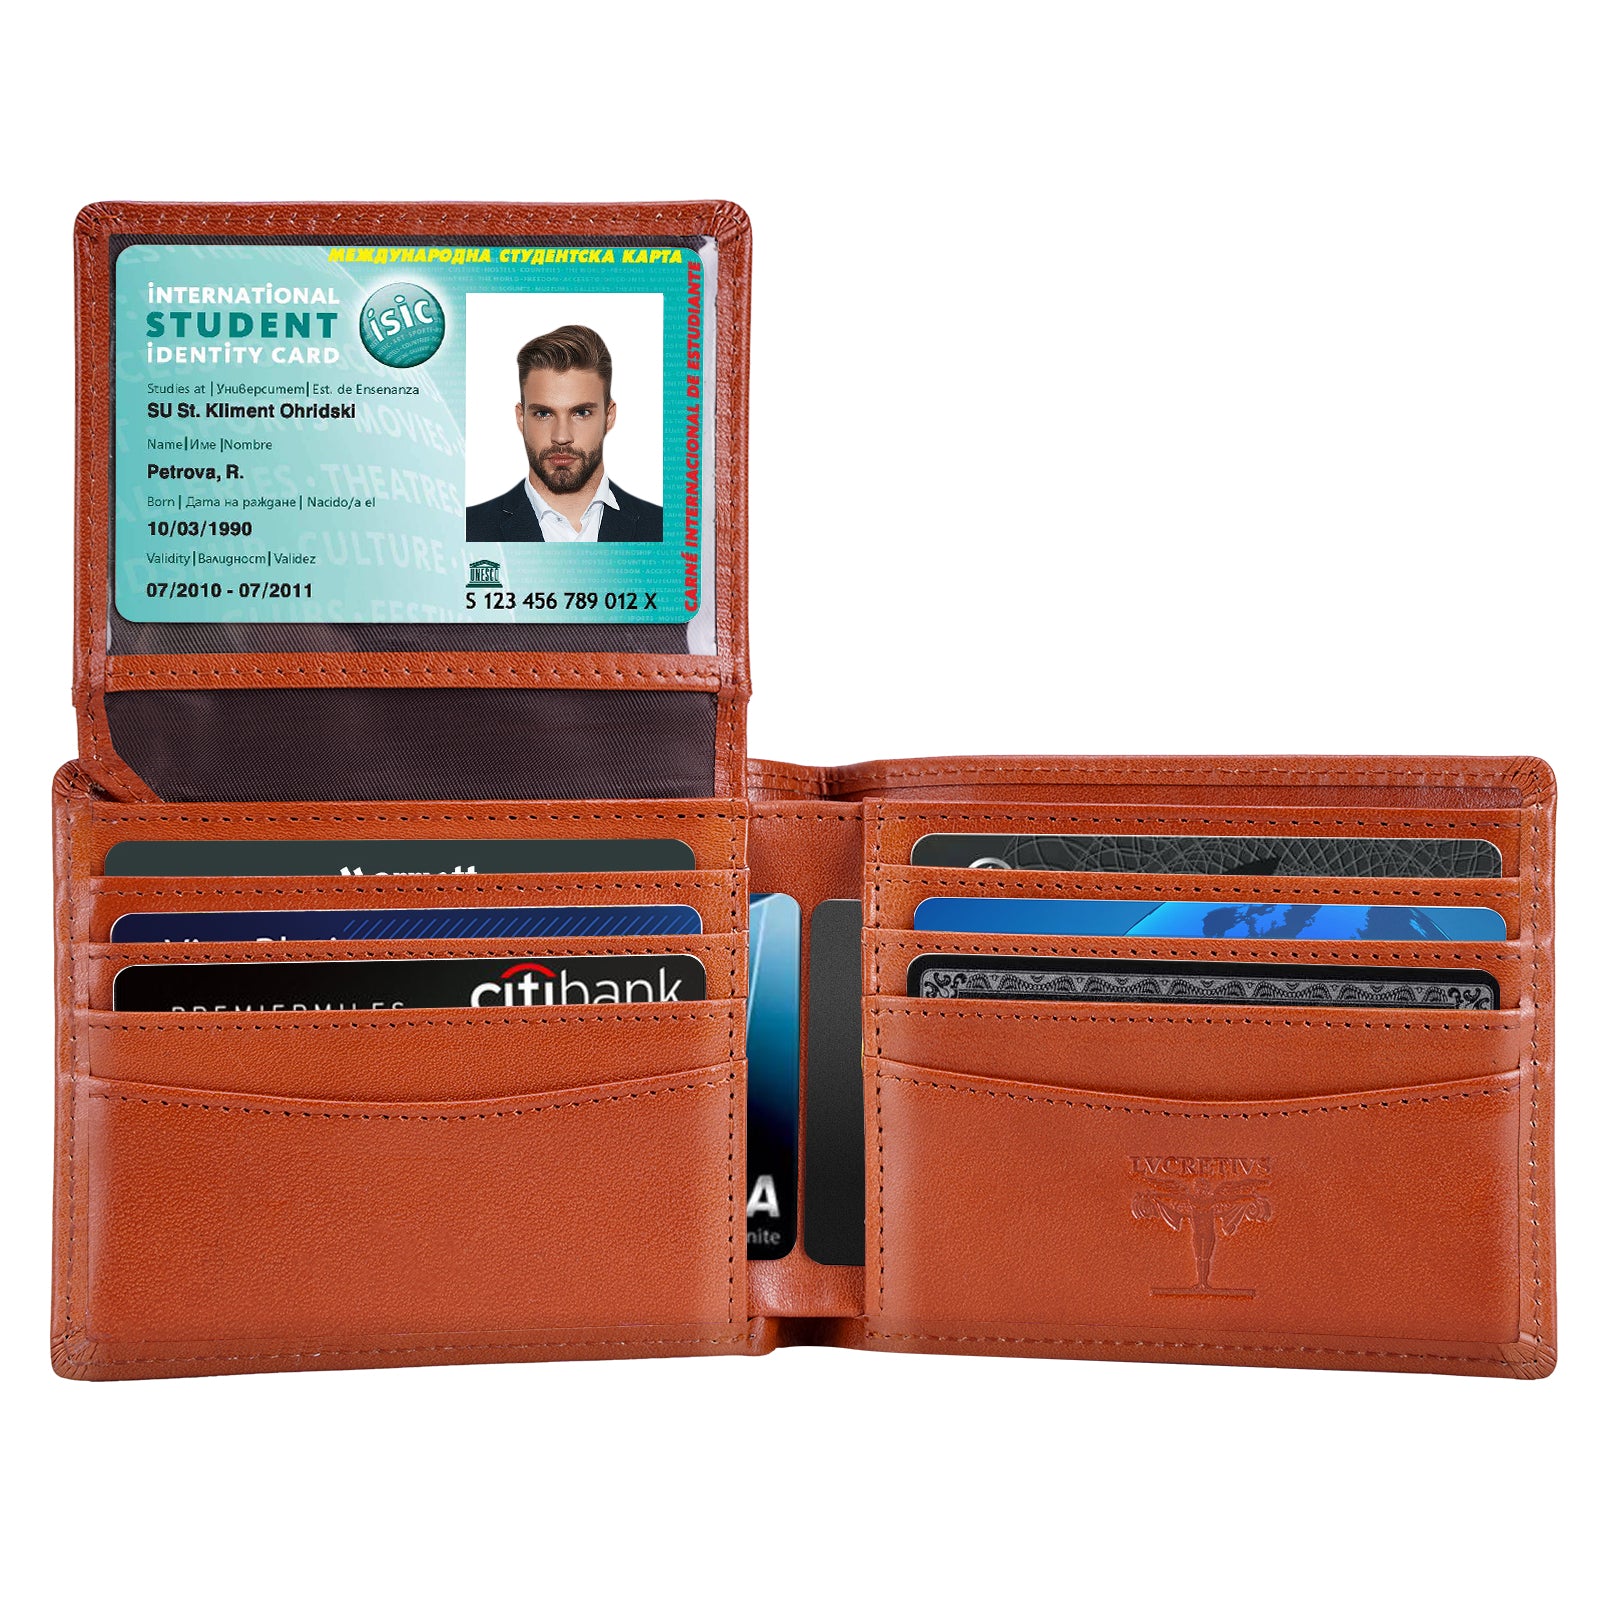 LVCRETIVS Vegetable Tanned Full Grain Leather RFID Blocking Bifold Wallet (Reddish Brown)